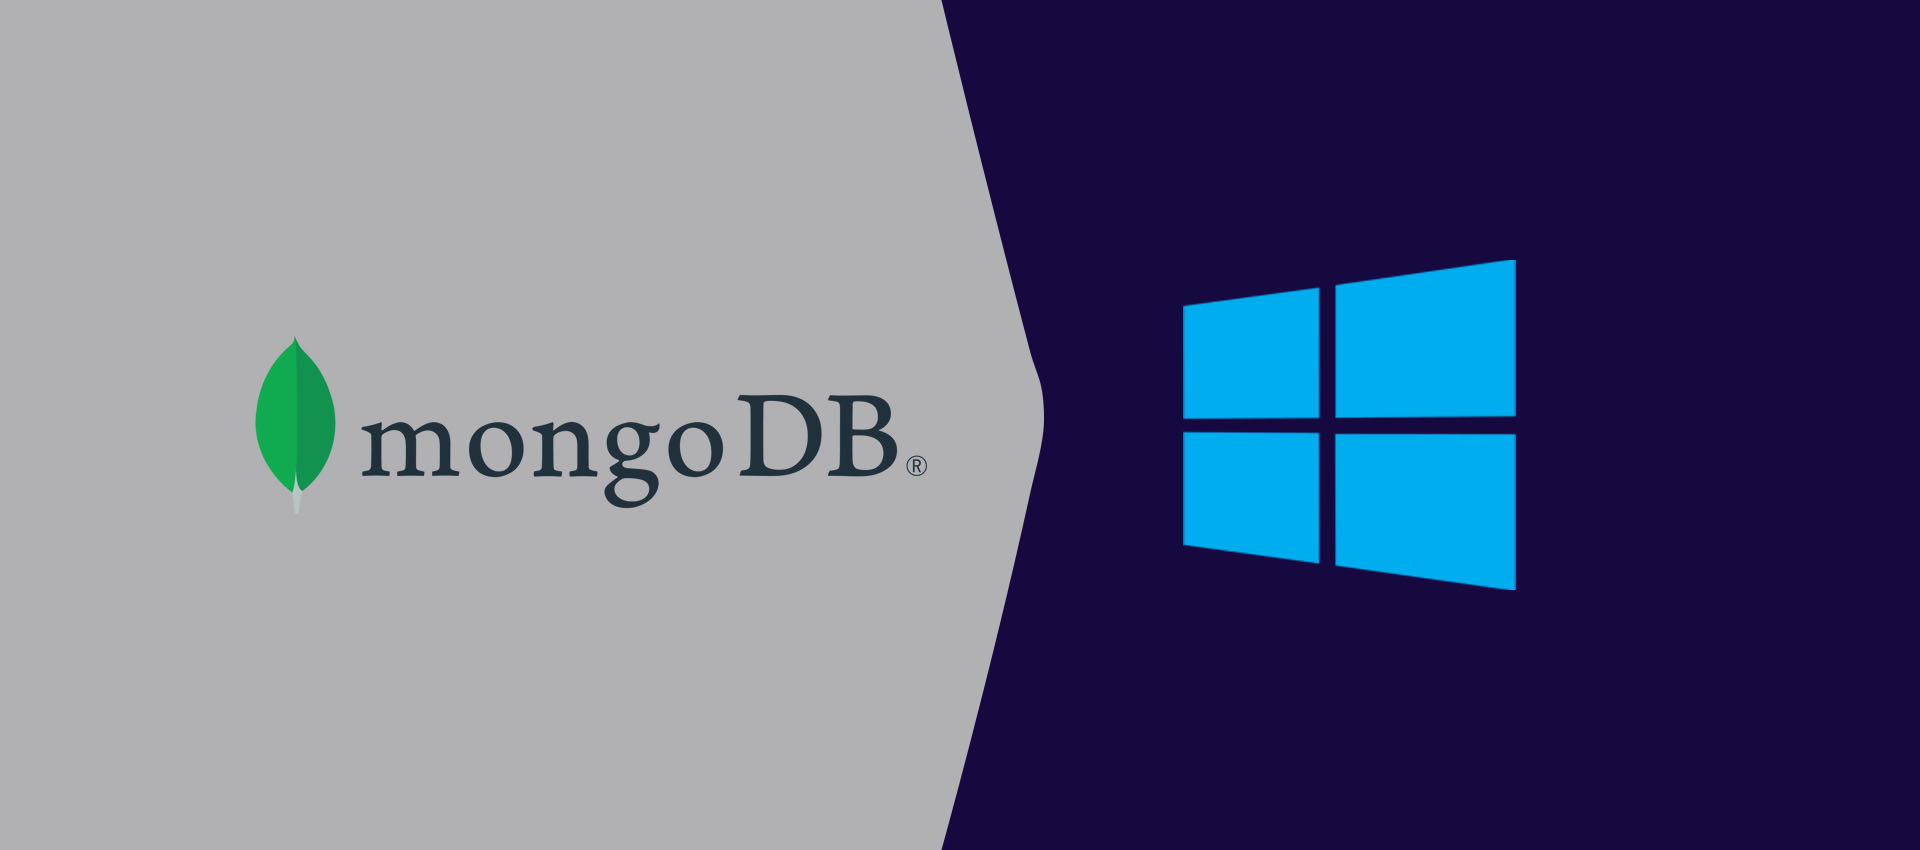 How To Install MongoDB 5 on Windows